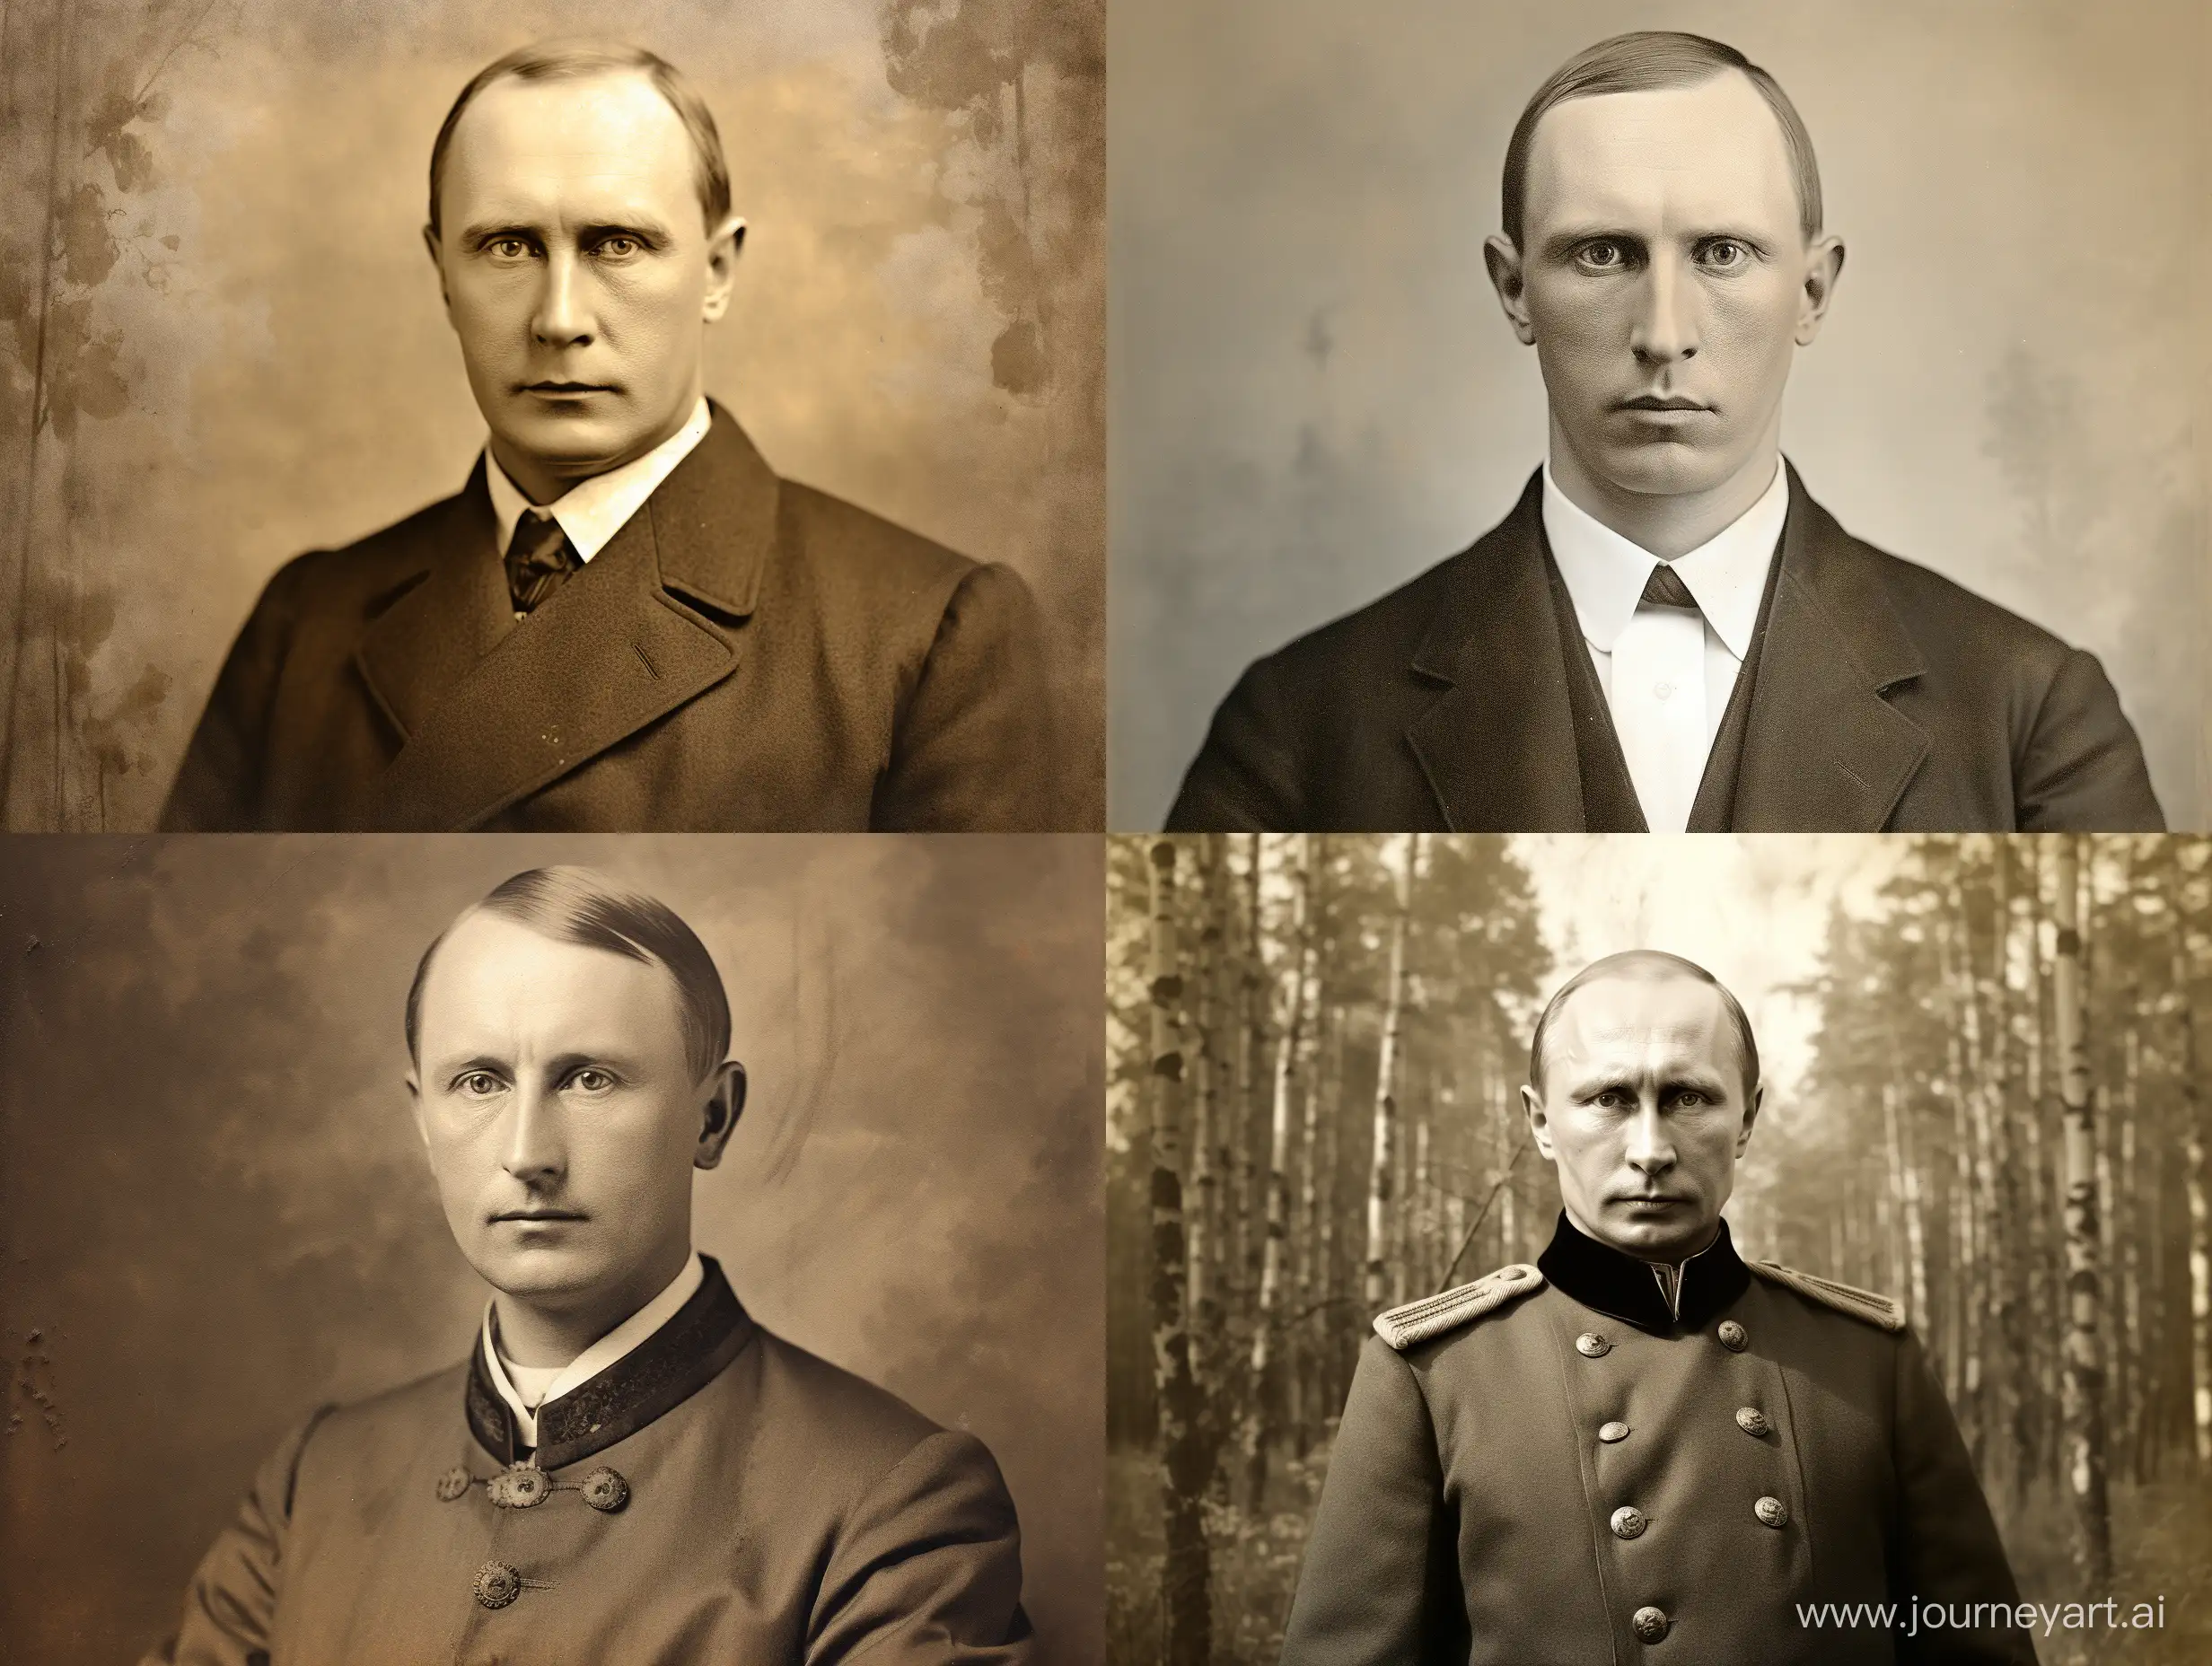 Hyperrealistic-Sepia-Photo-of-Historical-Figure-Vladimir-Putin